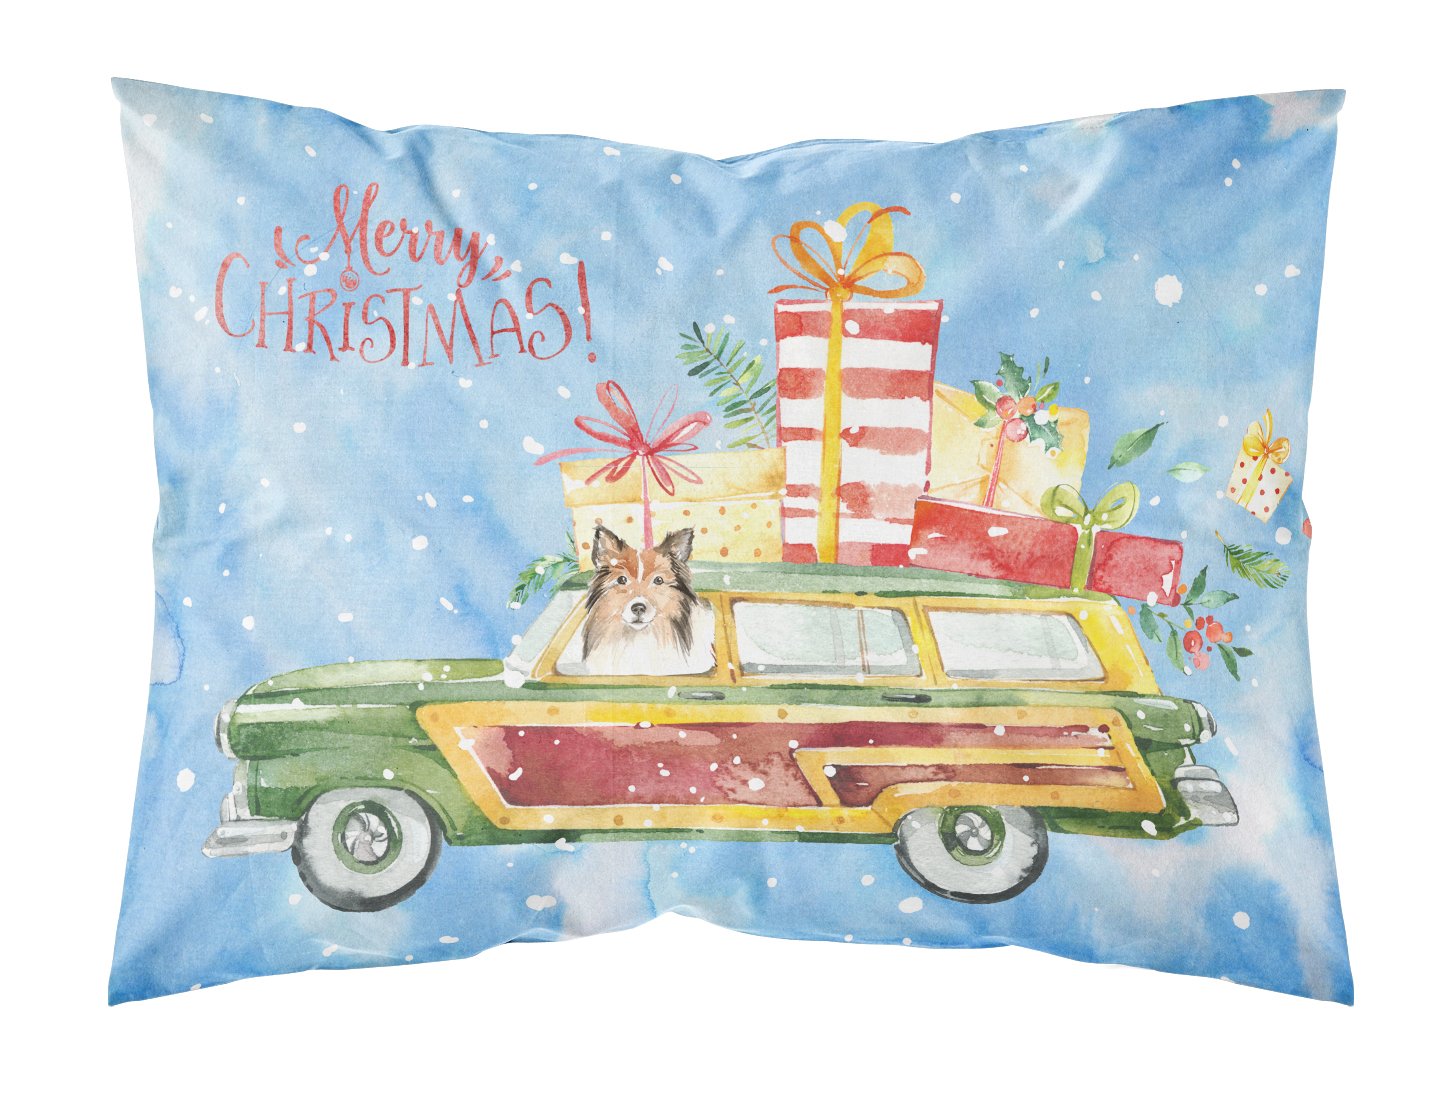 Merry Christmas Sheltie Fabric Standard Pillowcase CK2421PILLOWCASE by Caroline's Treasures